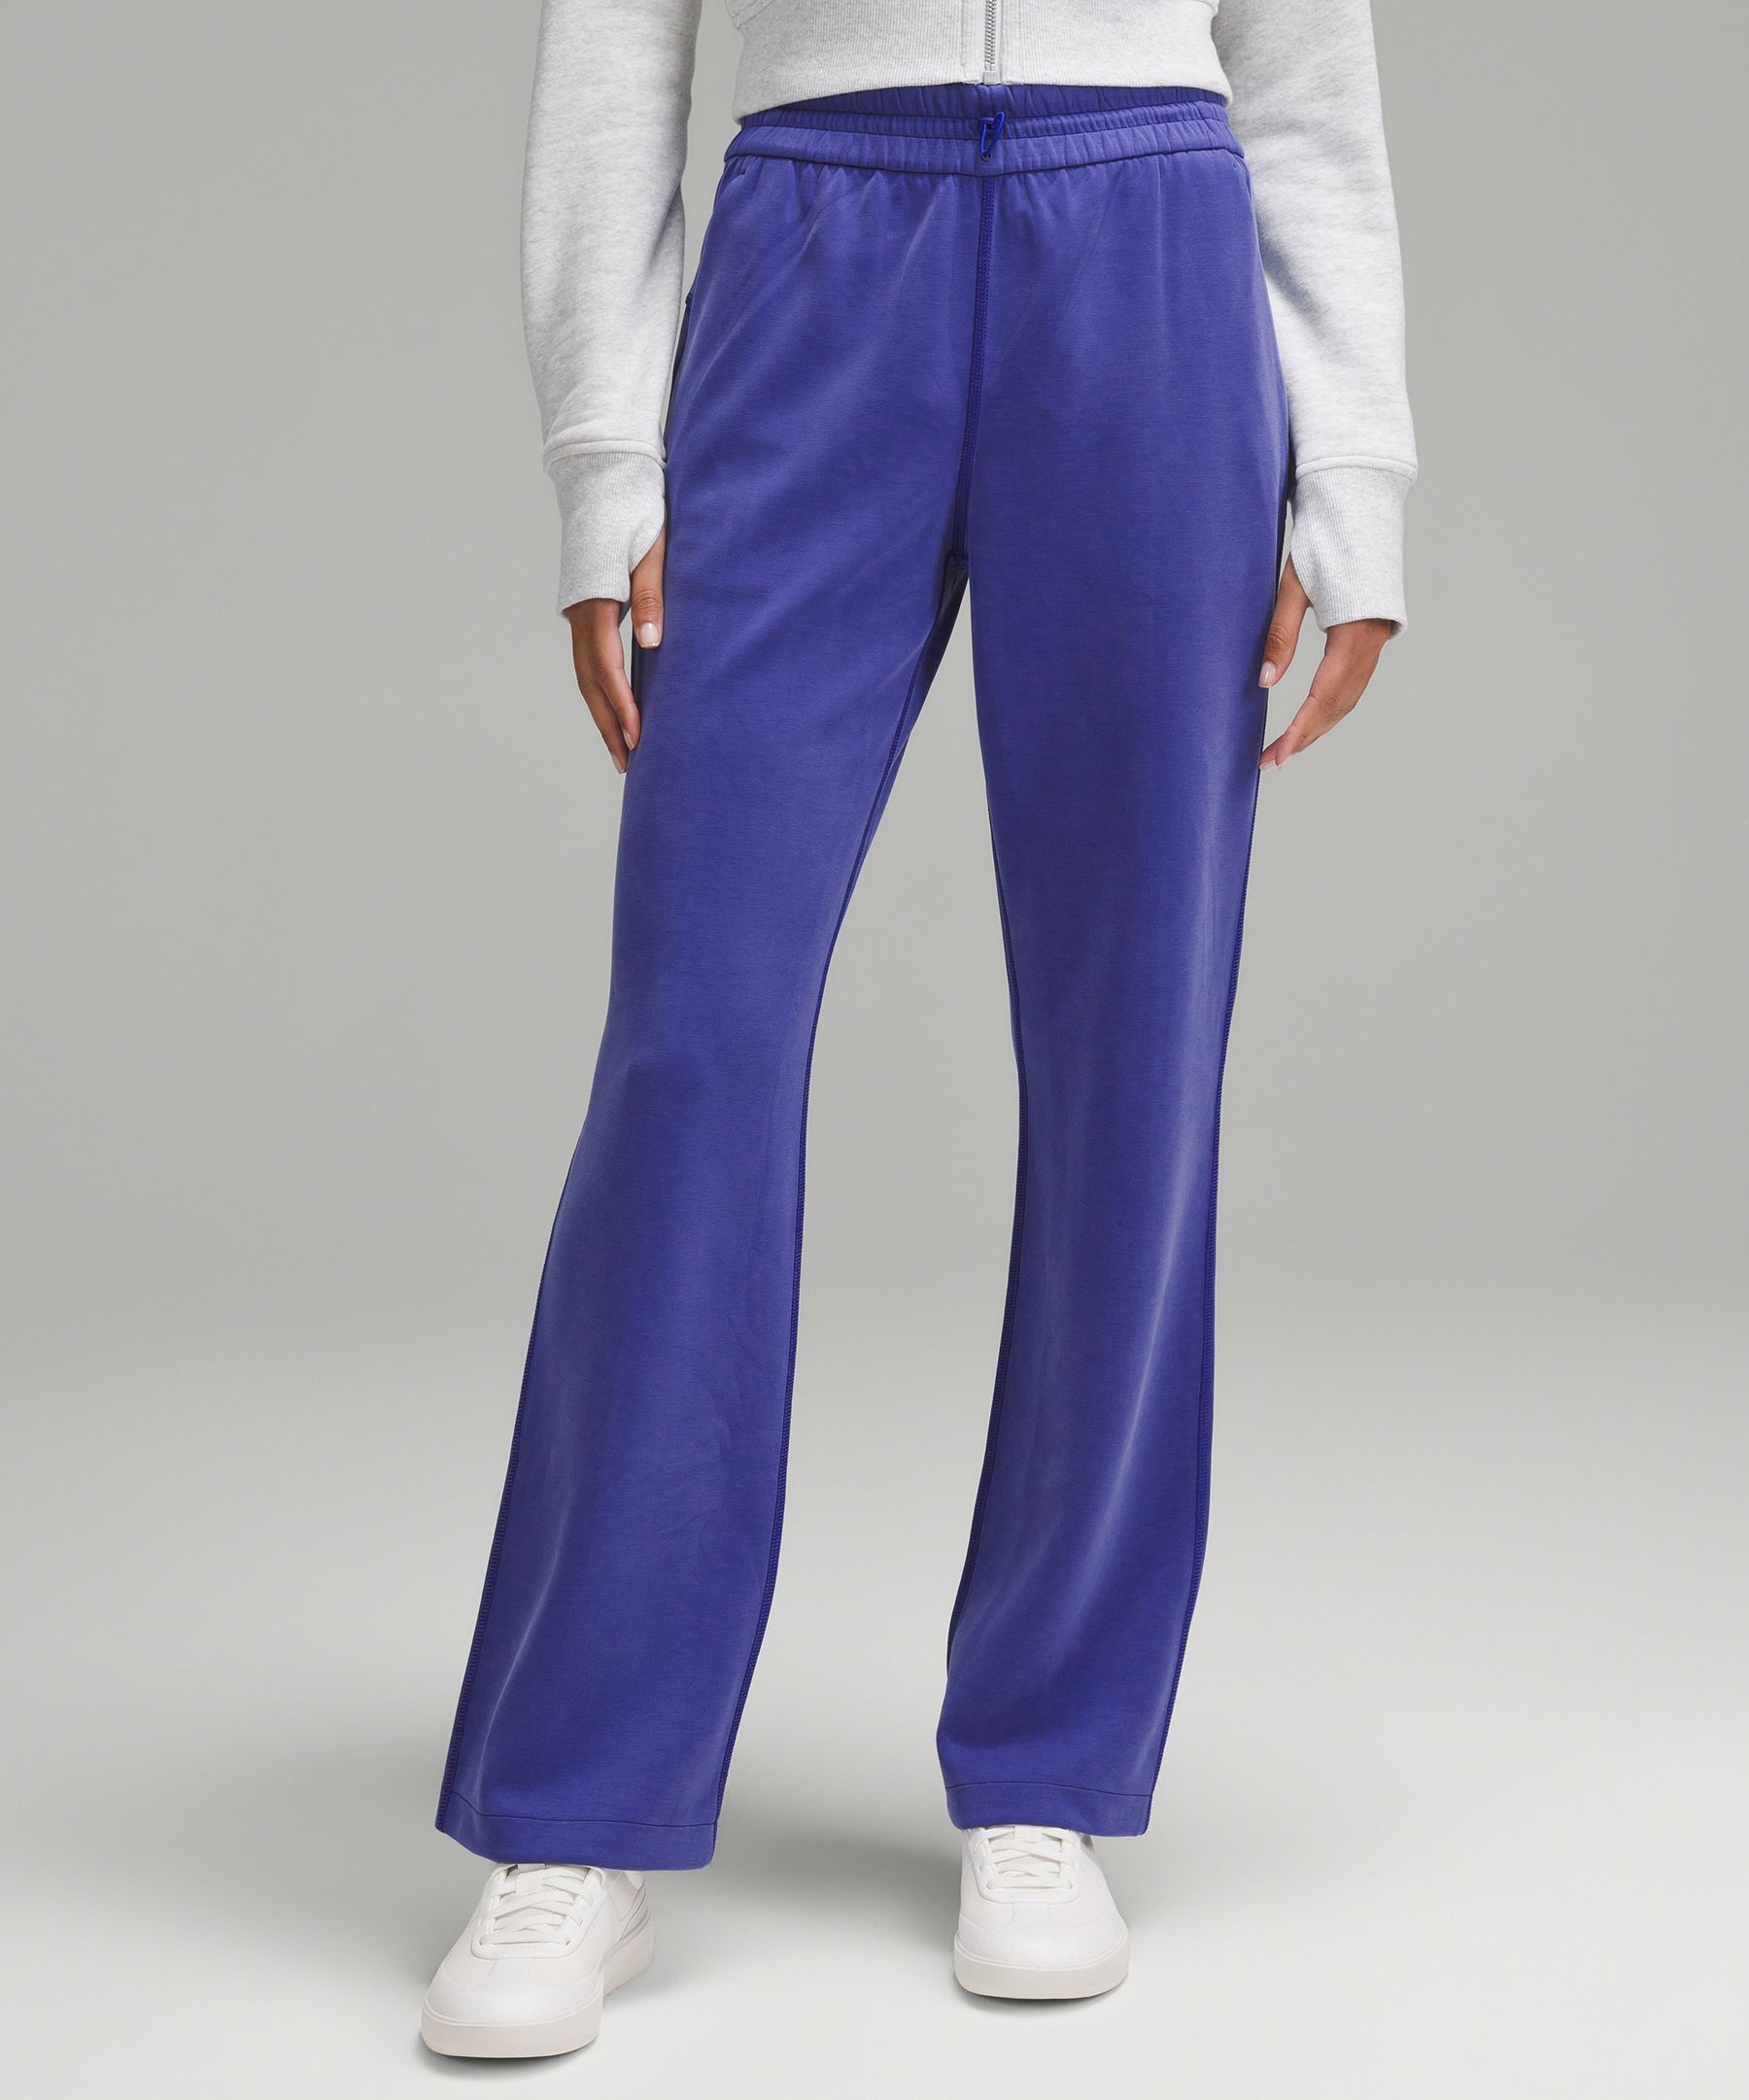 Softstreme HR pants full length size 4 on 5'0! I love them :D : r